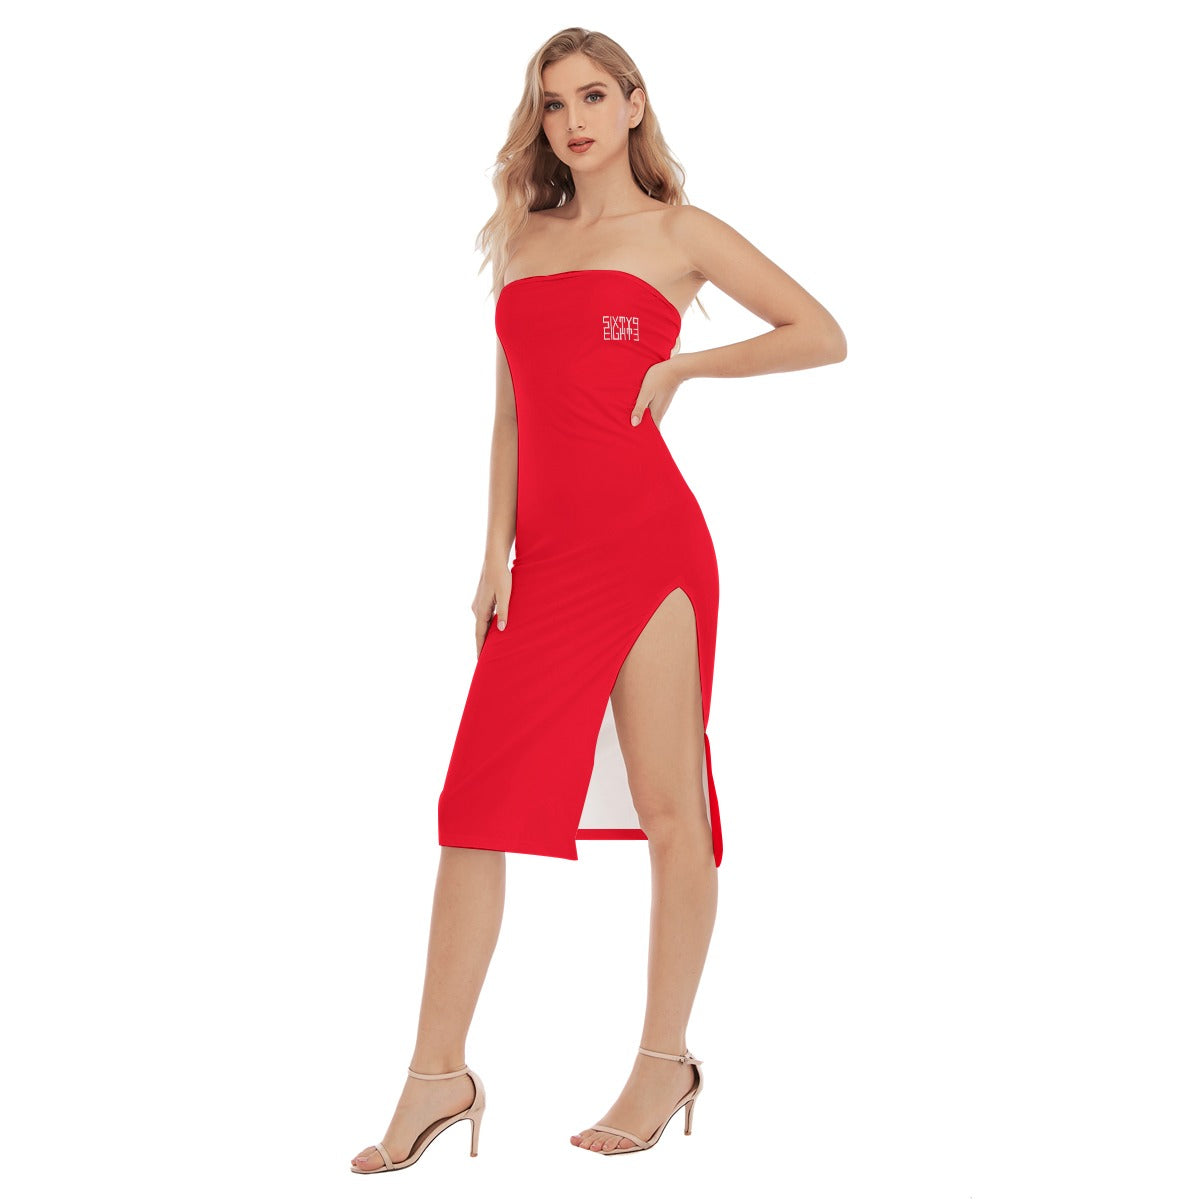 Sixty Eight 93 Logo White Red Women's Side Split Tube Top Dress